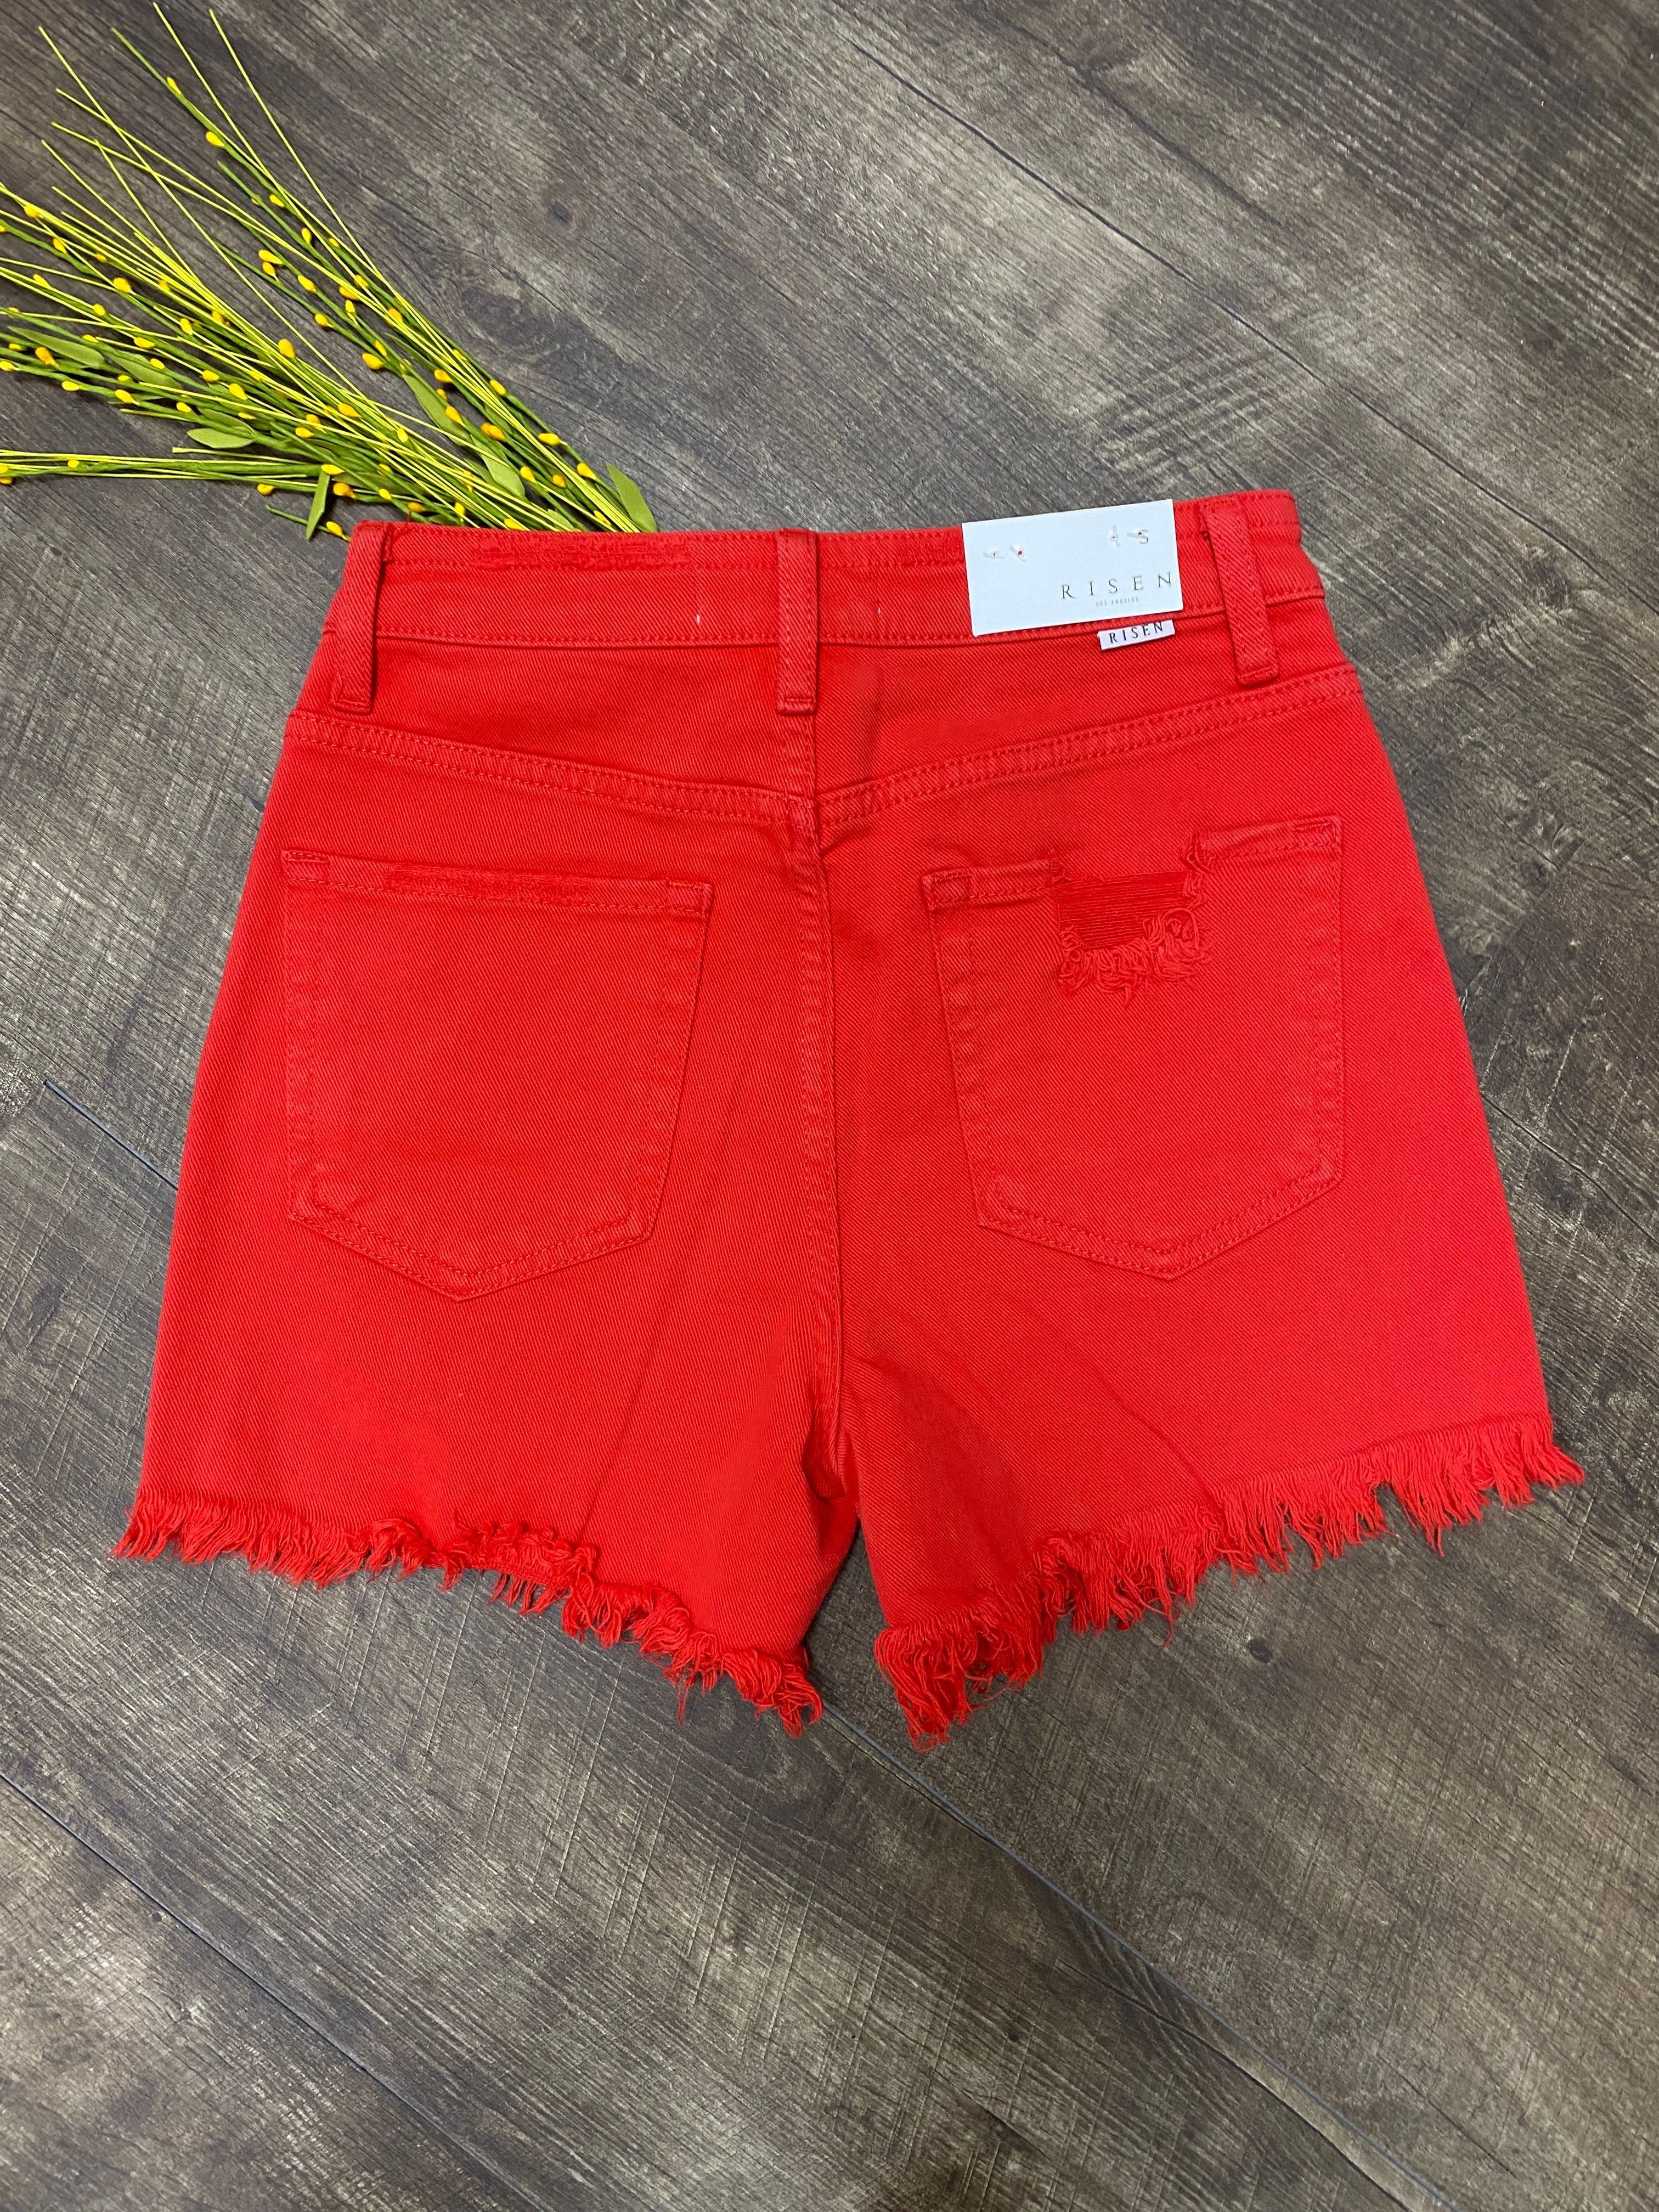 Fiesta Red Shorts